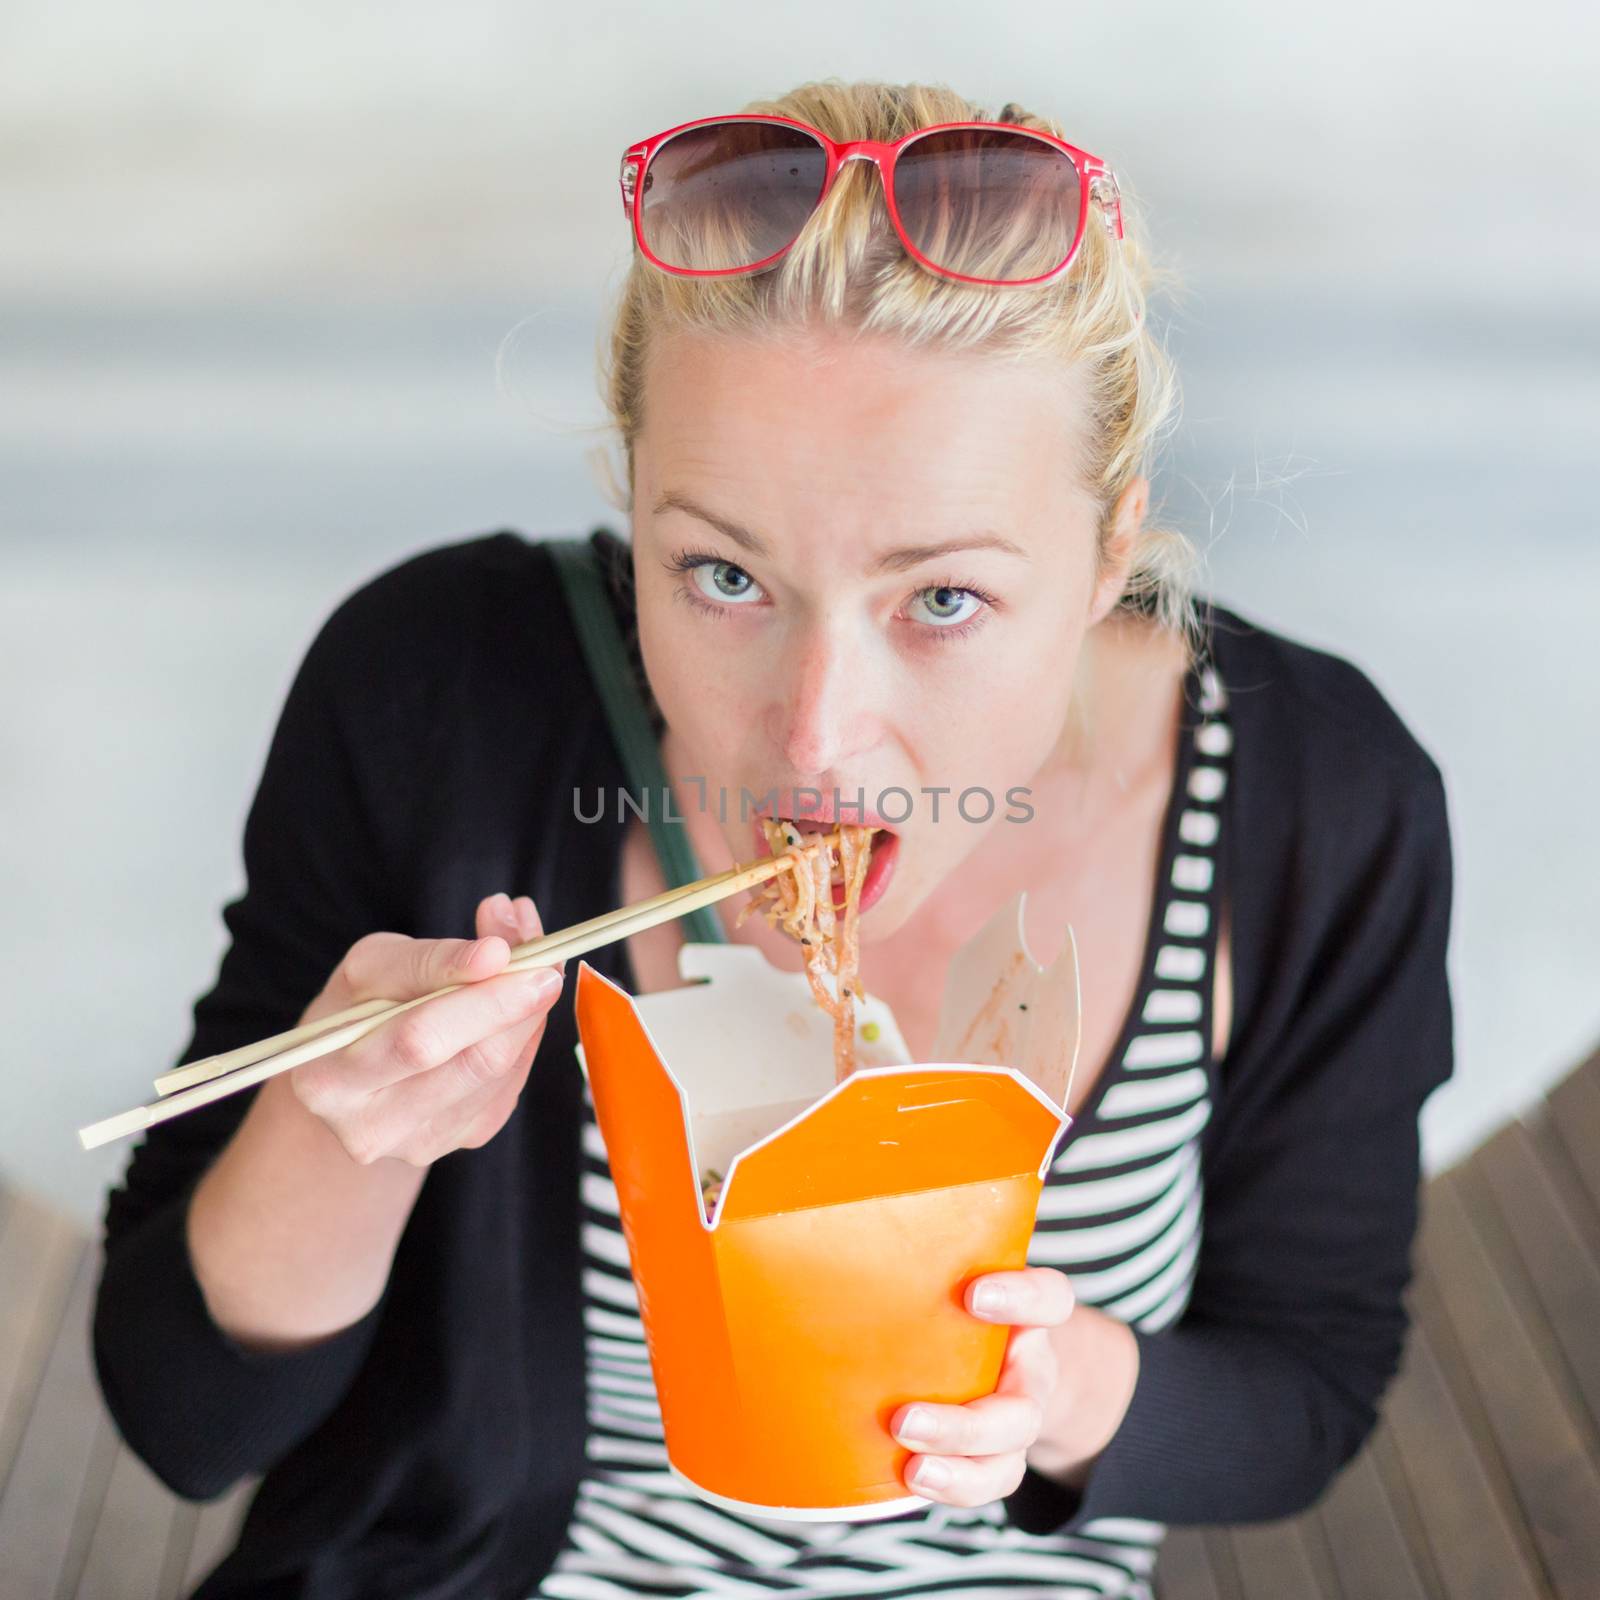 Woman eating Chinese take-away noodels. by kasto